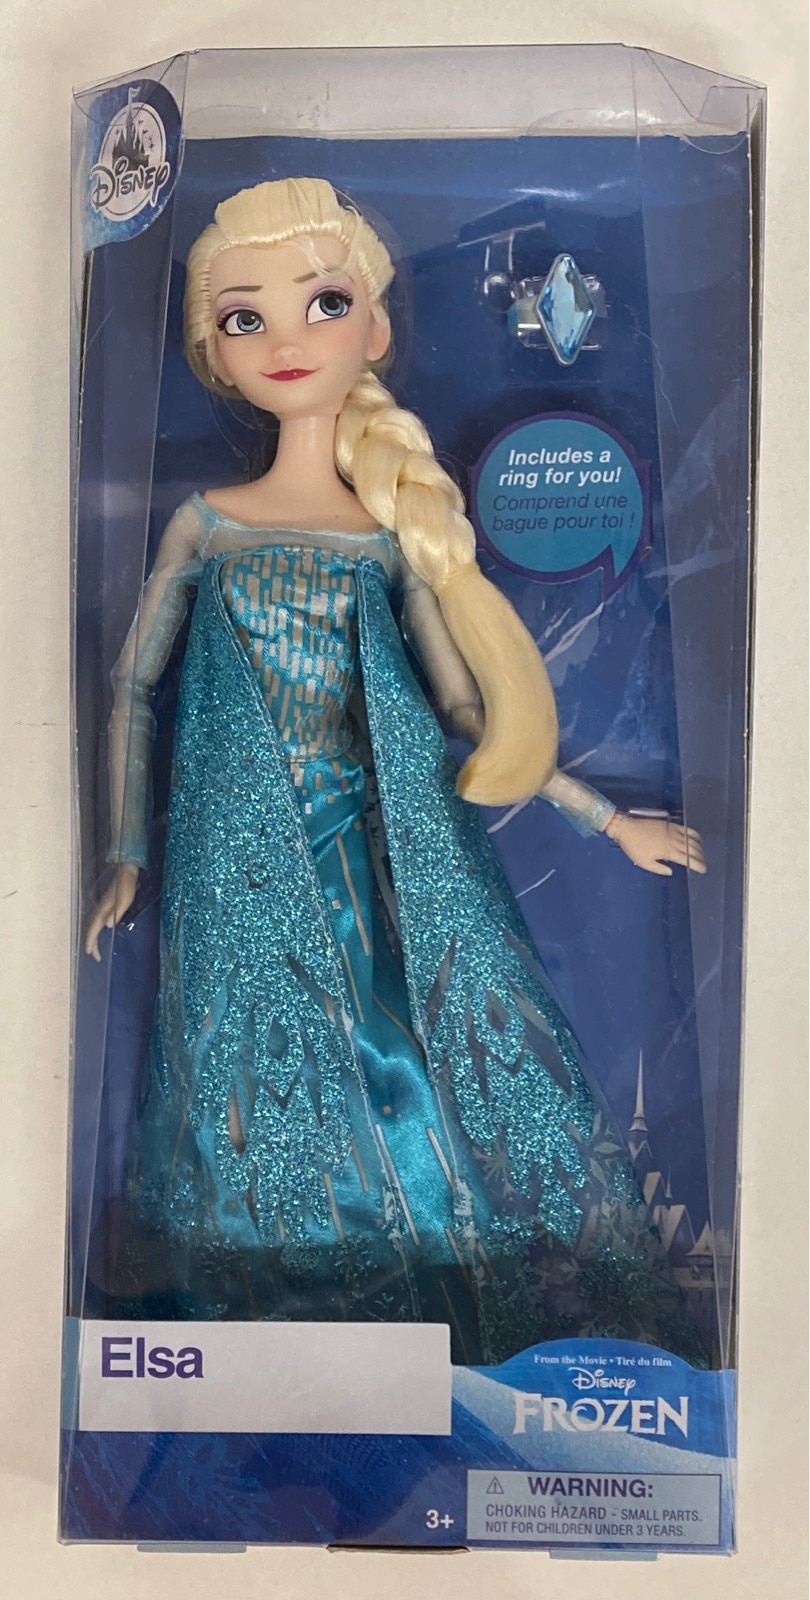 Disney Store Classic Doll Collection Frozen Disney Elsa Mandarake Online Shop